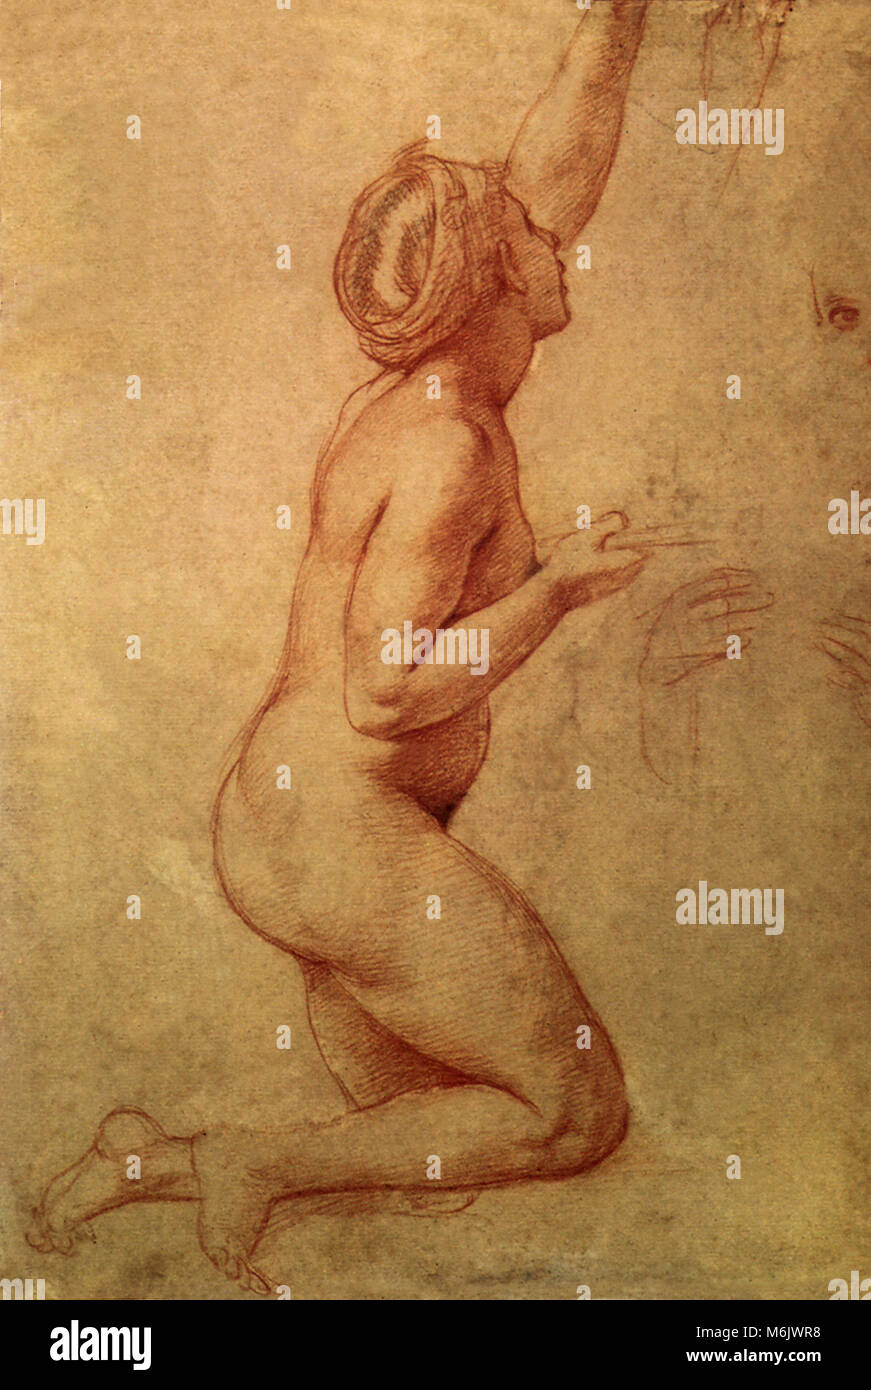 Jeune fille nue, agenouillee, tournee vers la droite, Raphael, Raffaello S., 1517. Stock Photo